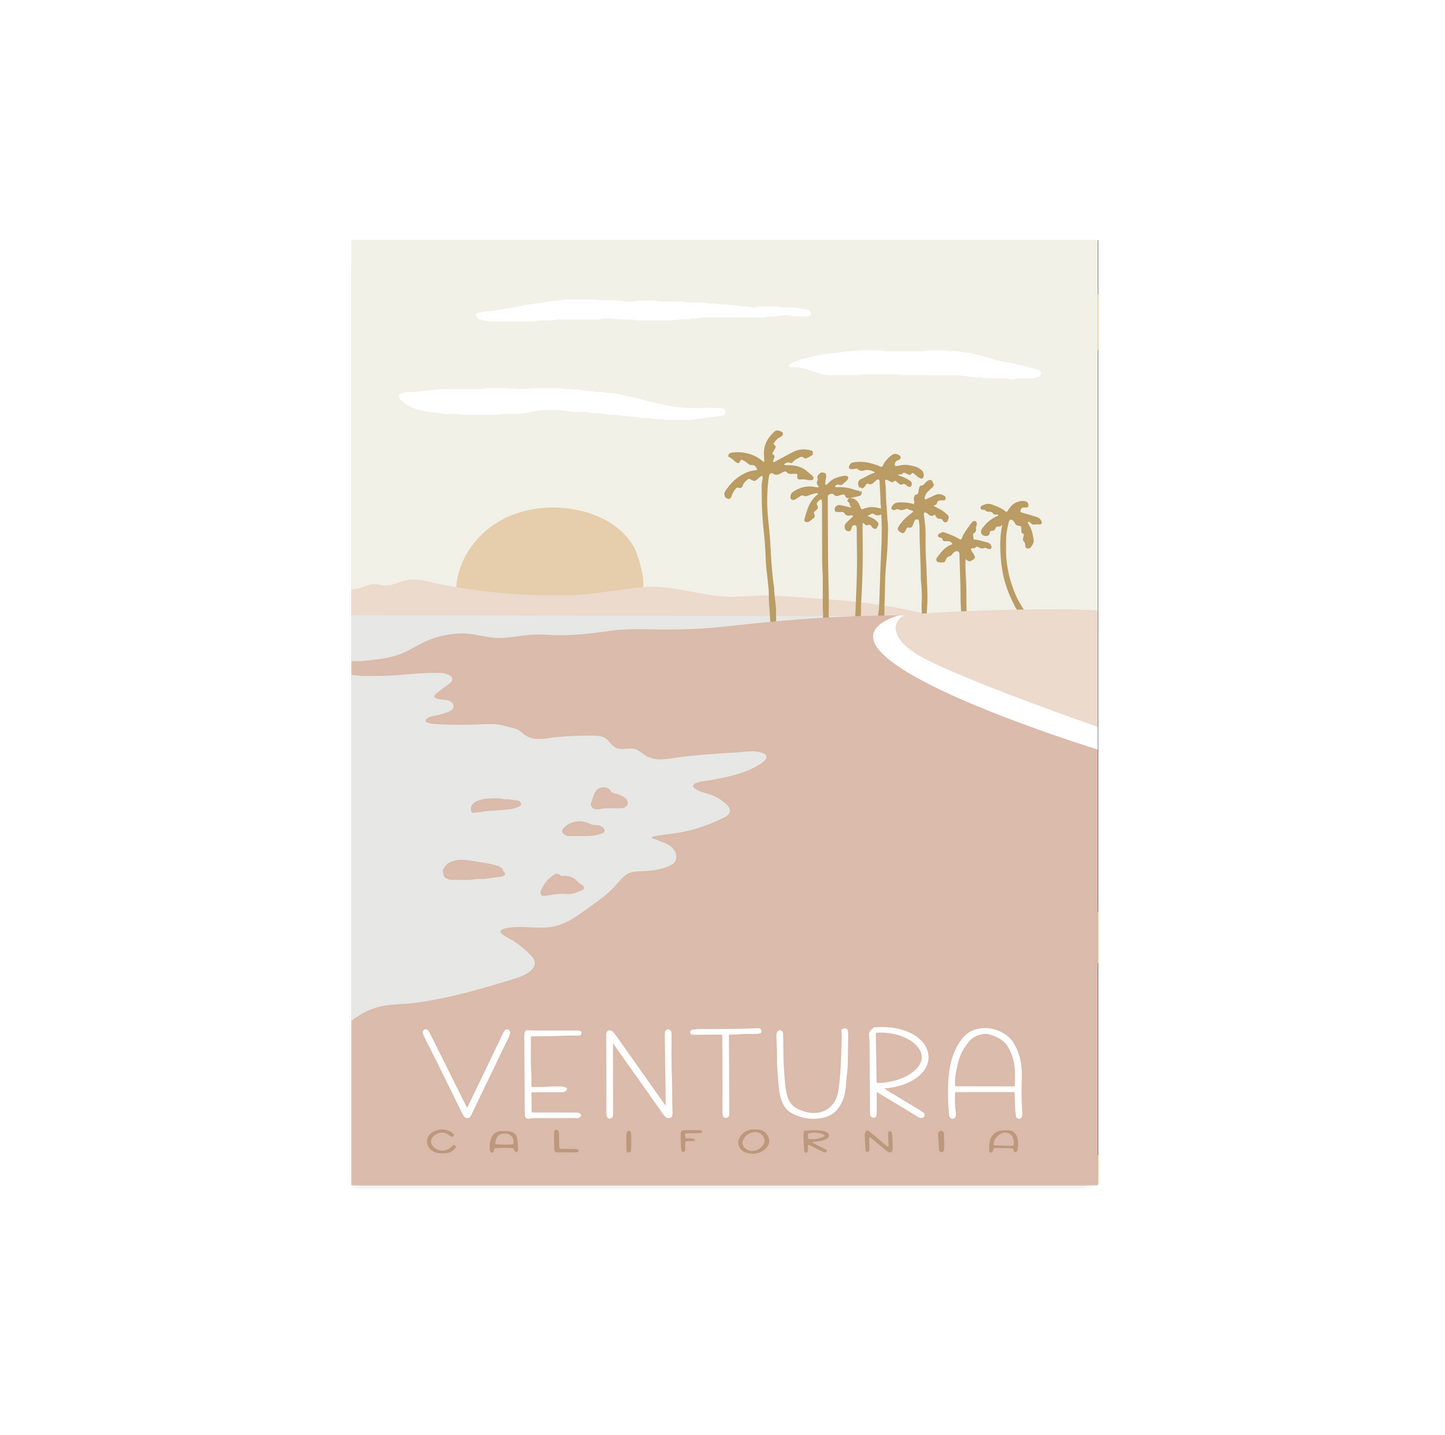 Ventura Poster